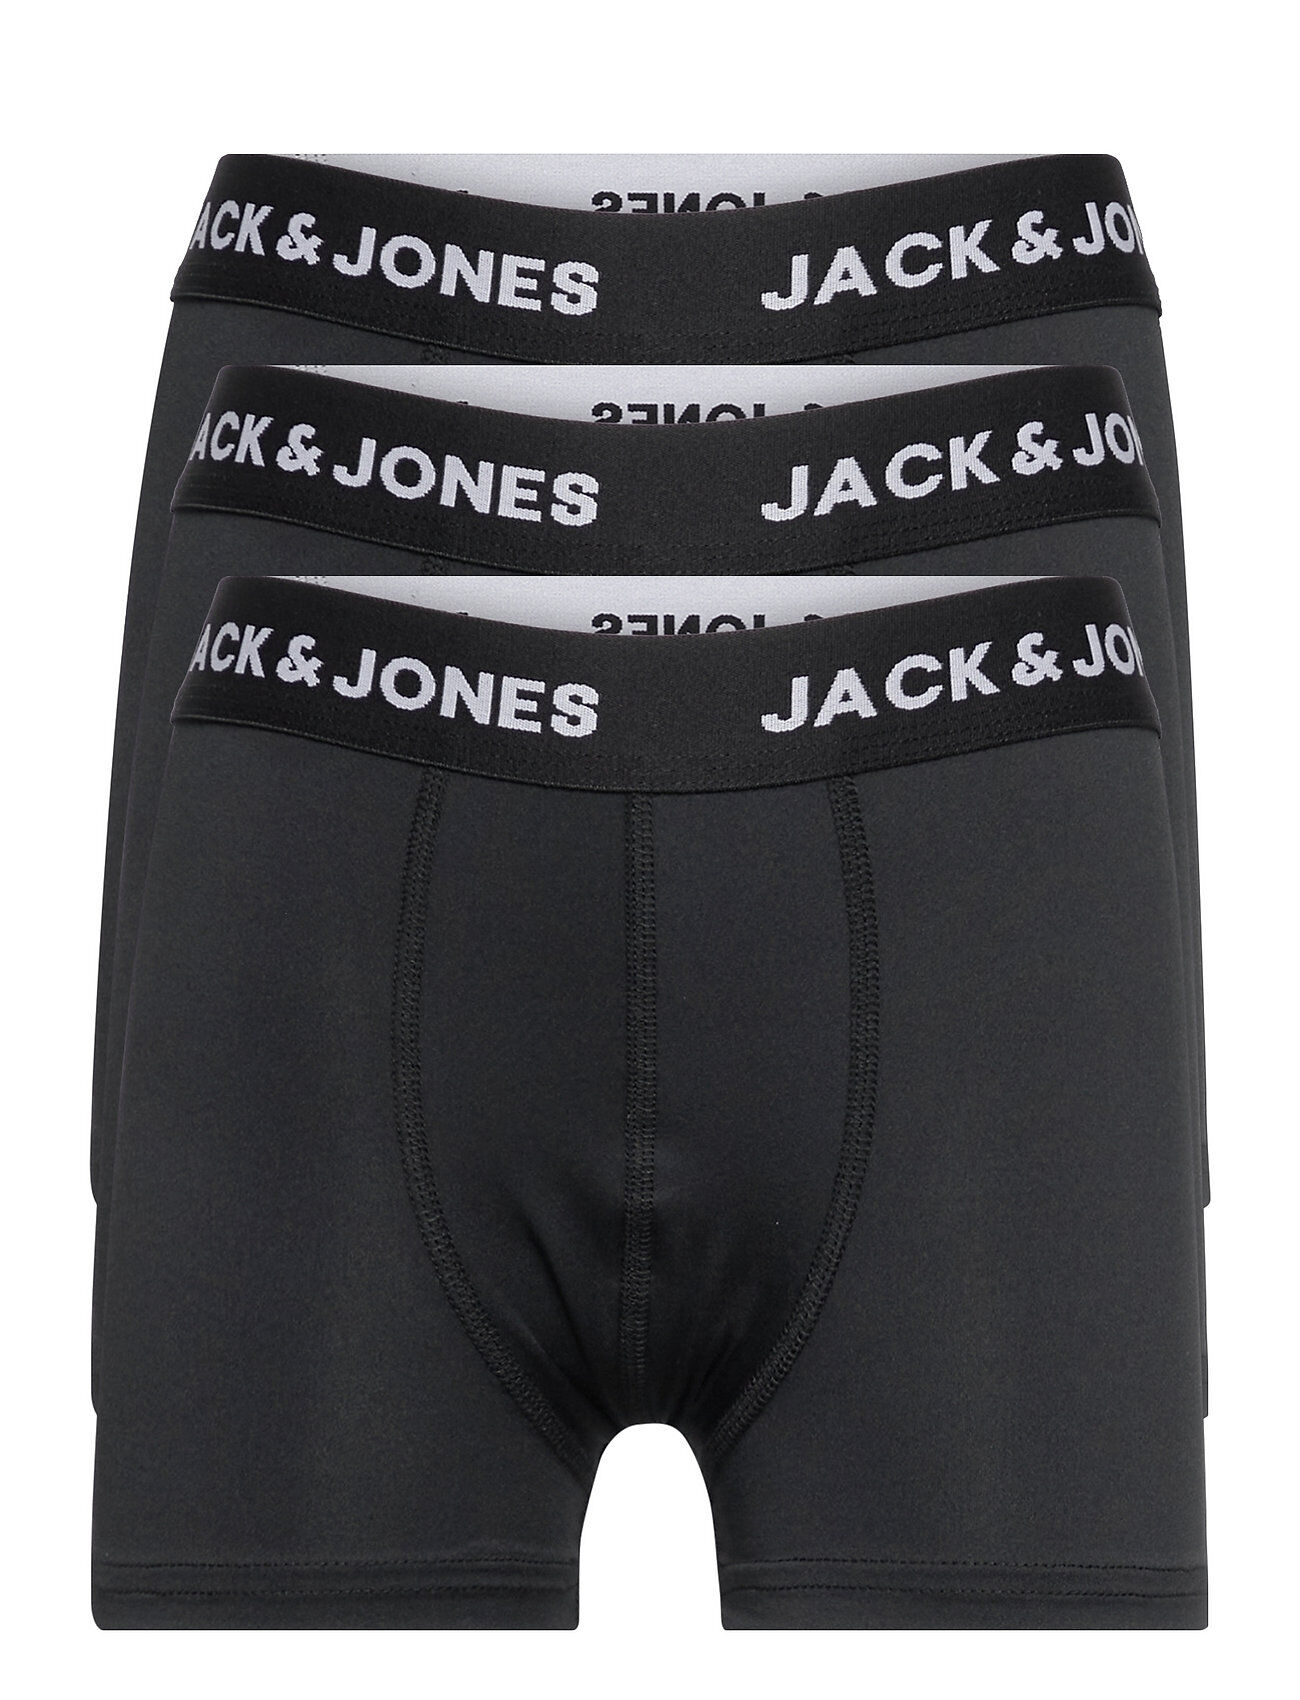 Jack & Jones Jacbase Microfiber Trunks 3Pack Jnr Night & Underwear Underwear Underpants Svart Jack & J S